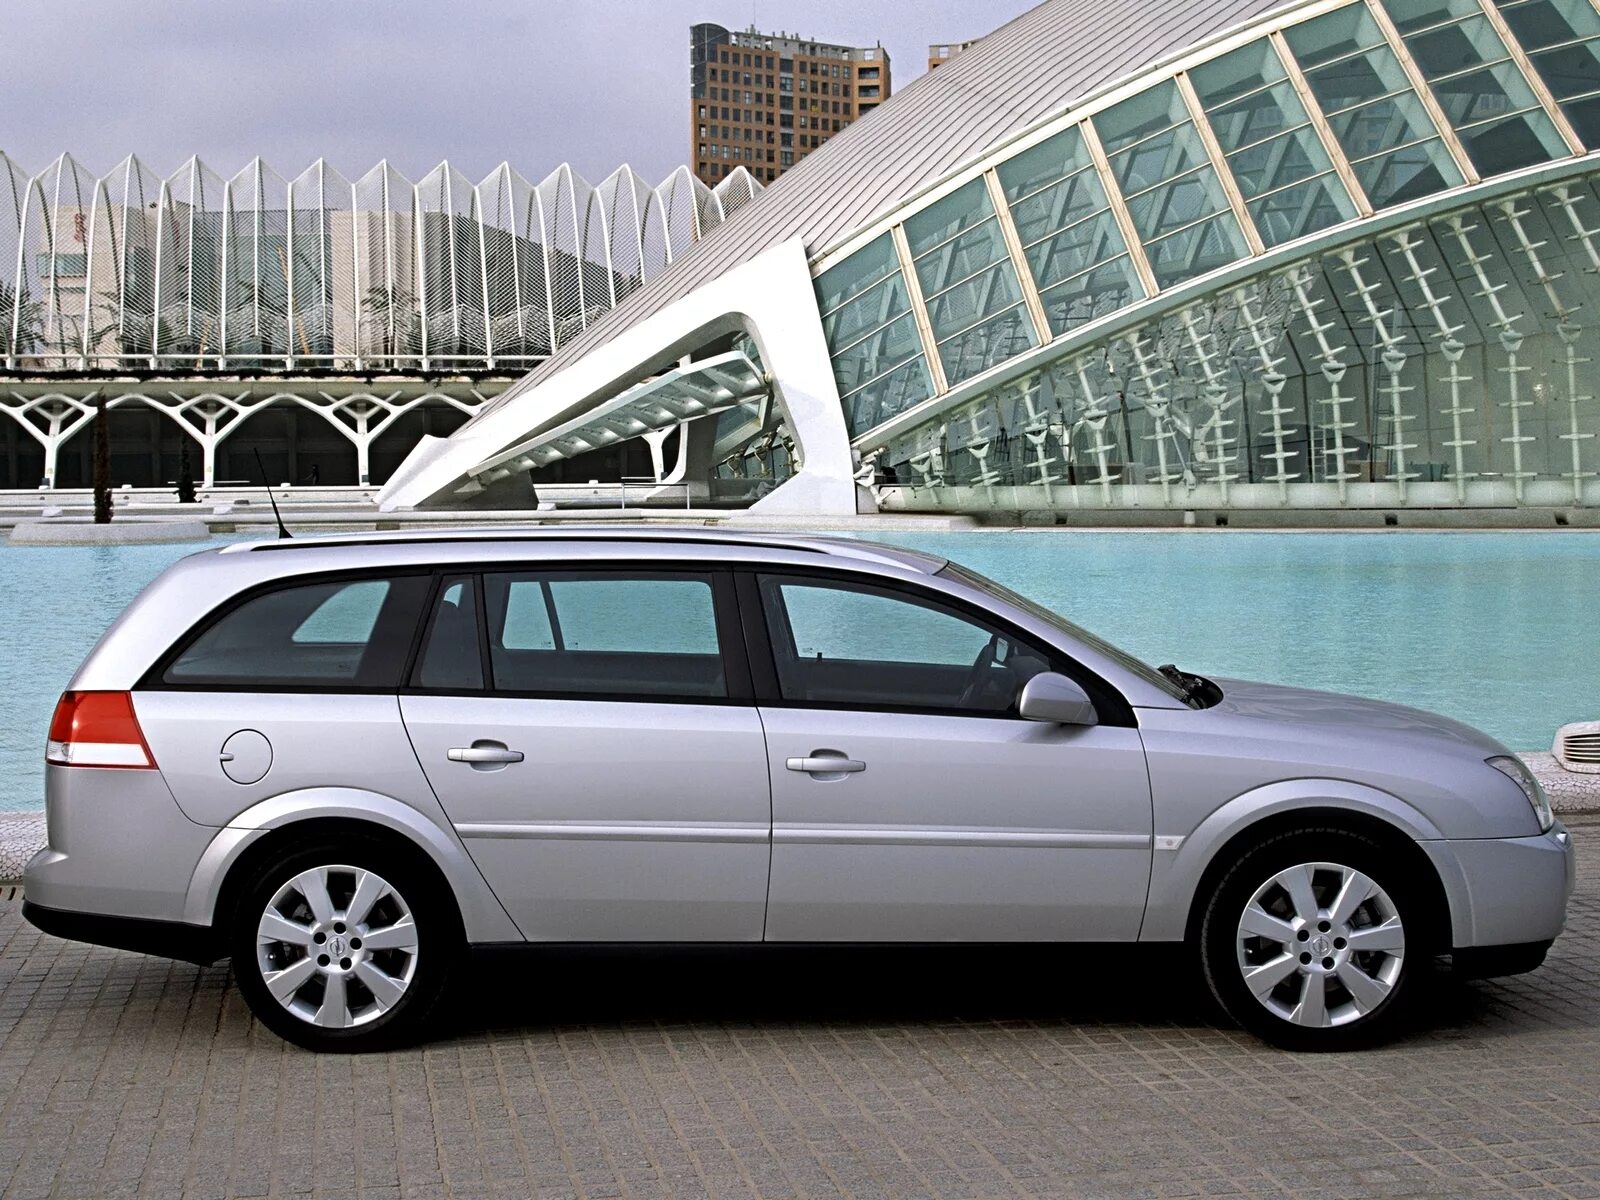 Универсал 1 7. Opel Vectra c 2003 универсал. Opel Vectra c 2005 универсал. Opel Vectra c 2008 универсал. Опель Вектра с 2005 универсал.